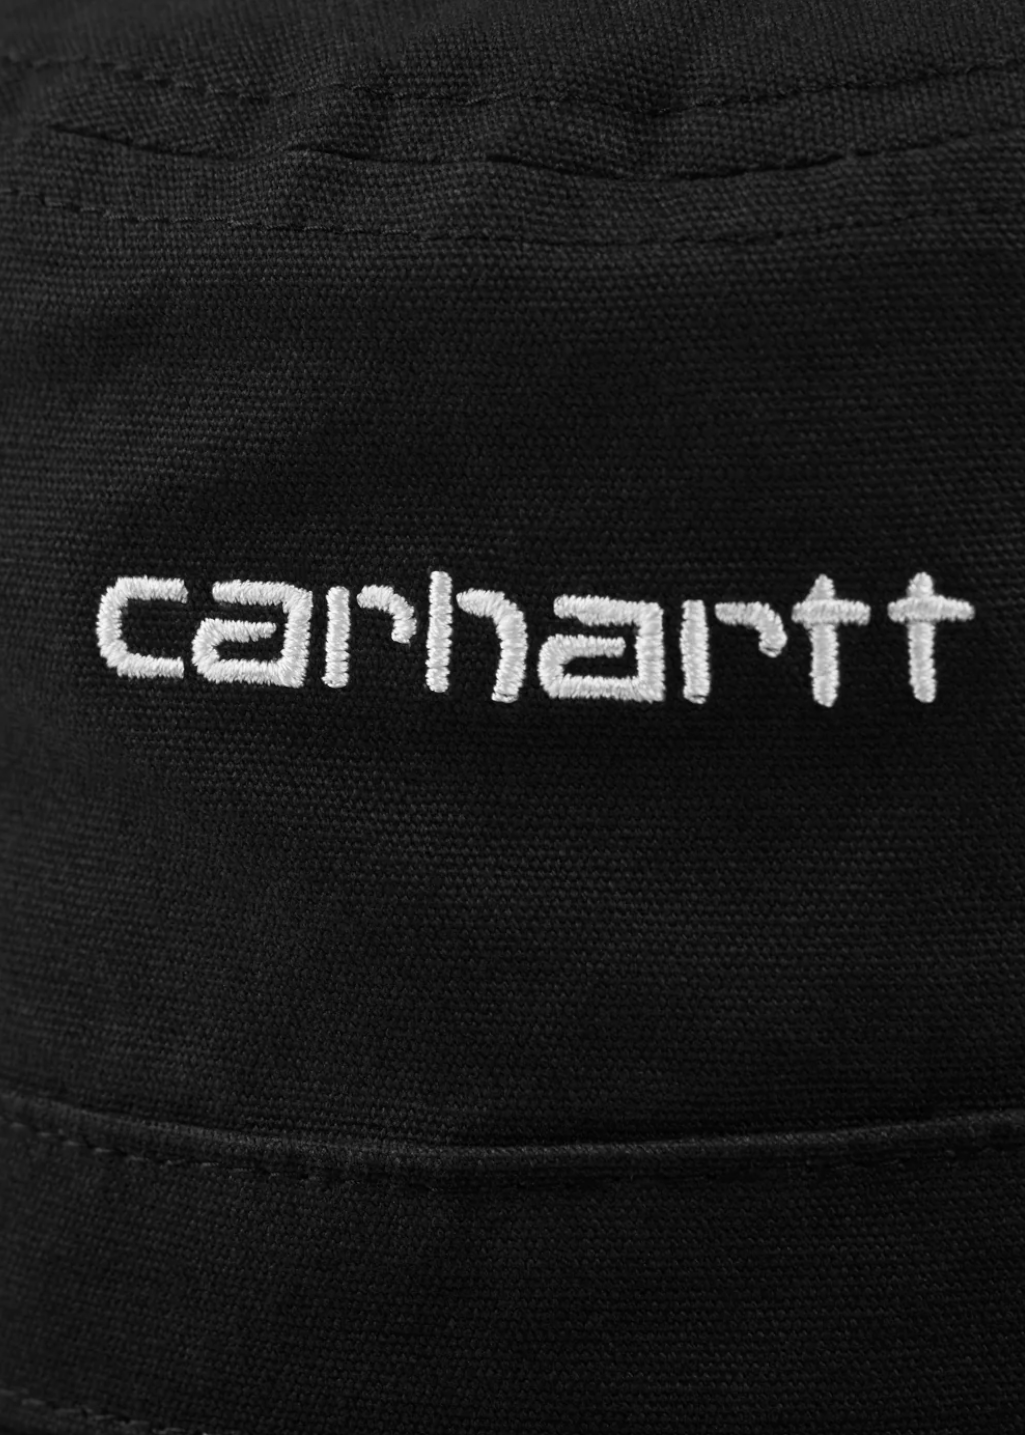 Carhartt WIP - Script Bucket Hat - Black/White - Hardpressed Print Studio Inc.